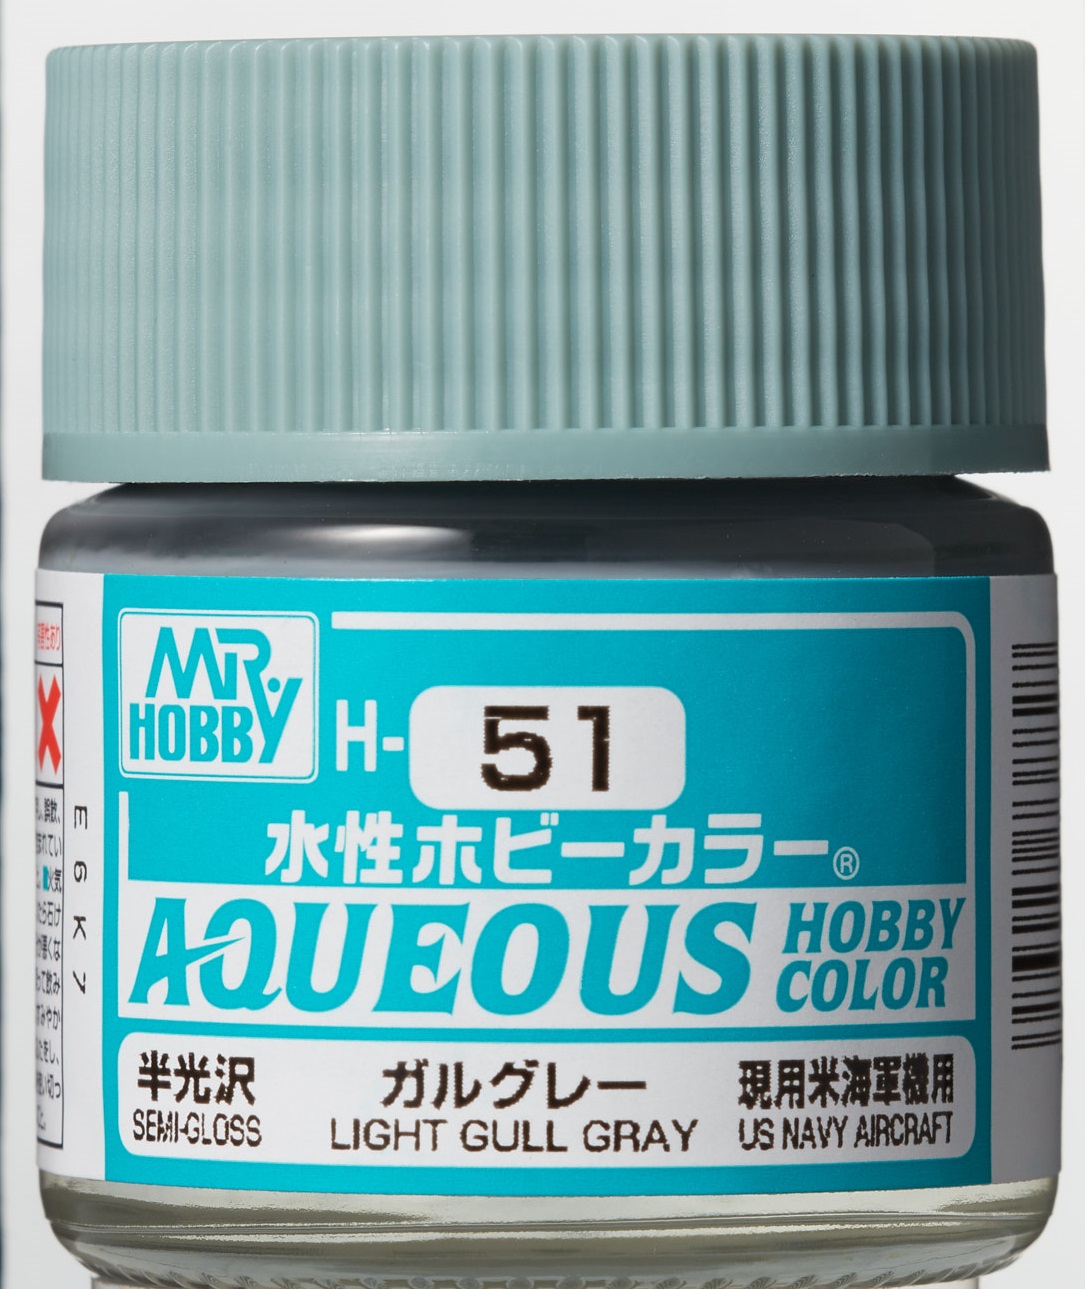 Mr. Aqueous Hobby Color - Light Gull Gray - H51 - Helles Möwen Grau